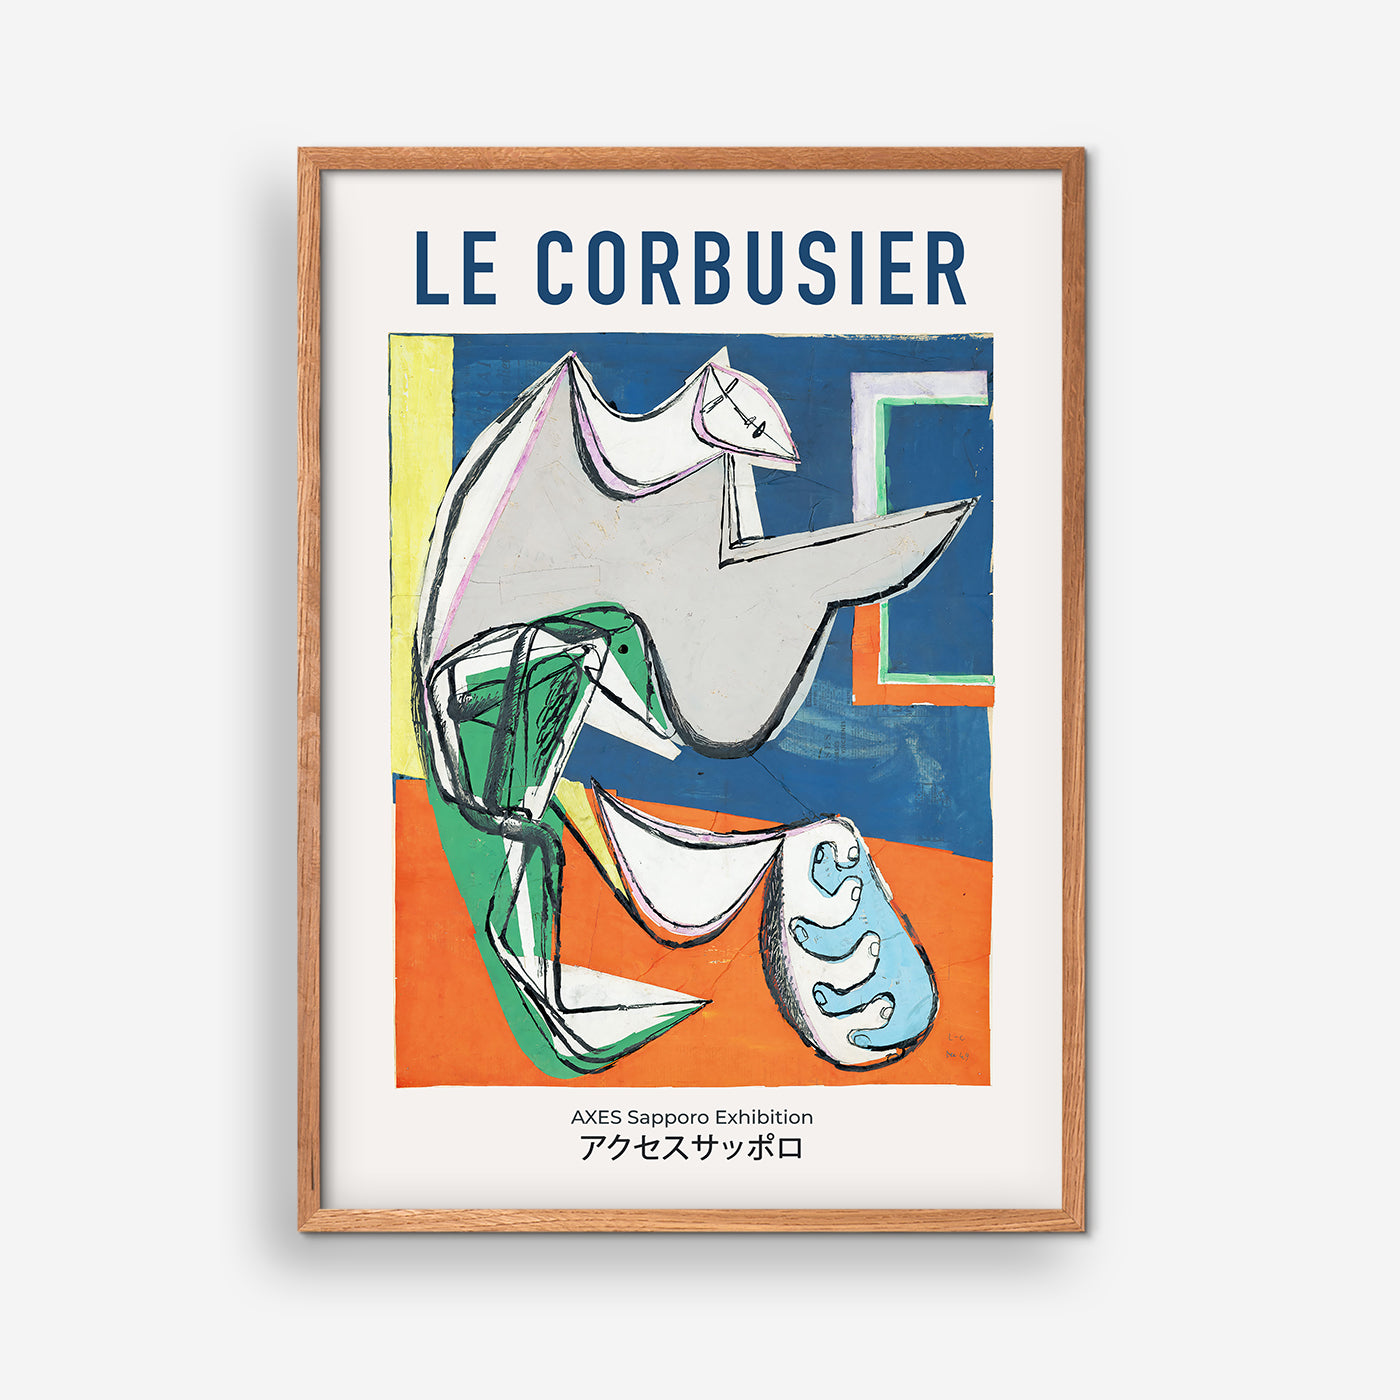 Le Corbusier AS Exhibition Poster 1949